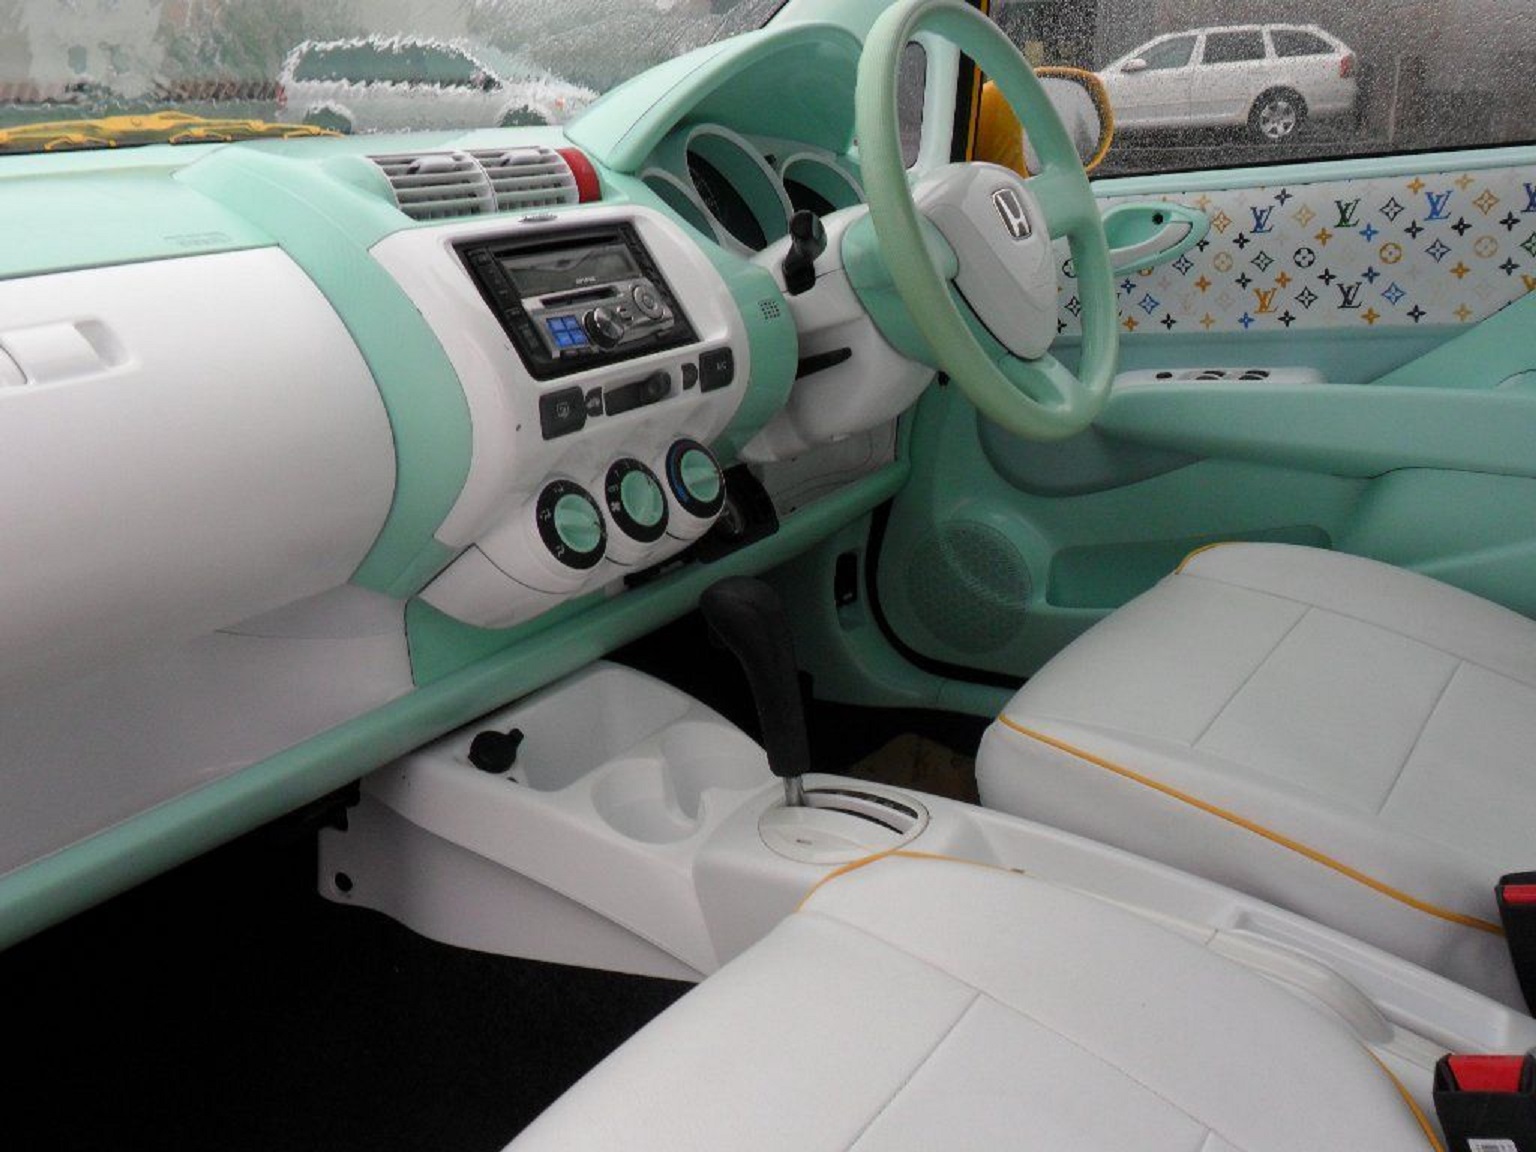 Custom car interior, Louis vuitton, Leather car seat covers